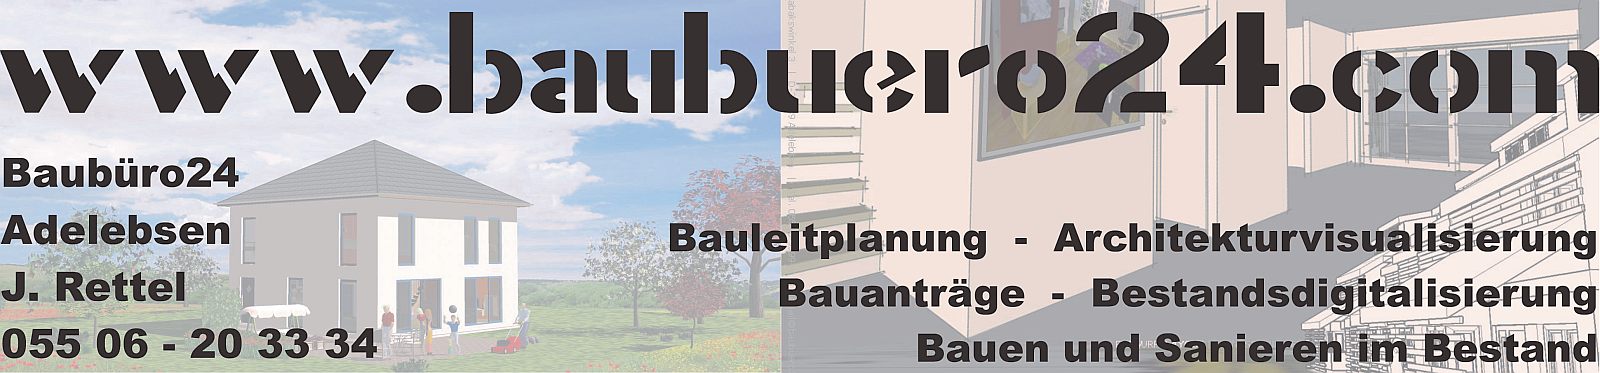 Baubuero24.com, Adelebsen